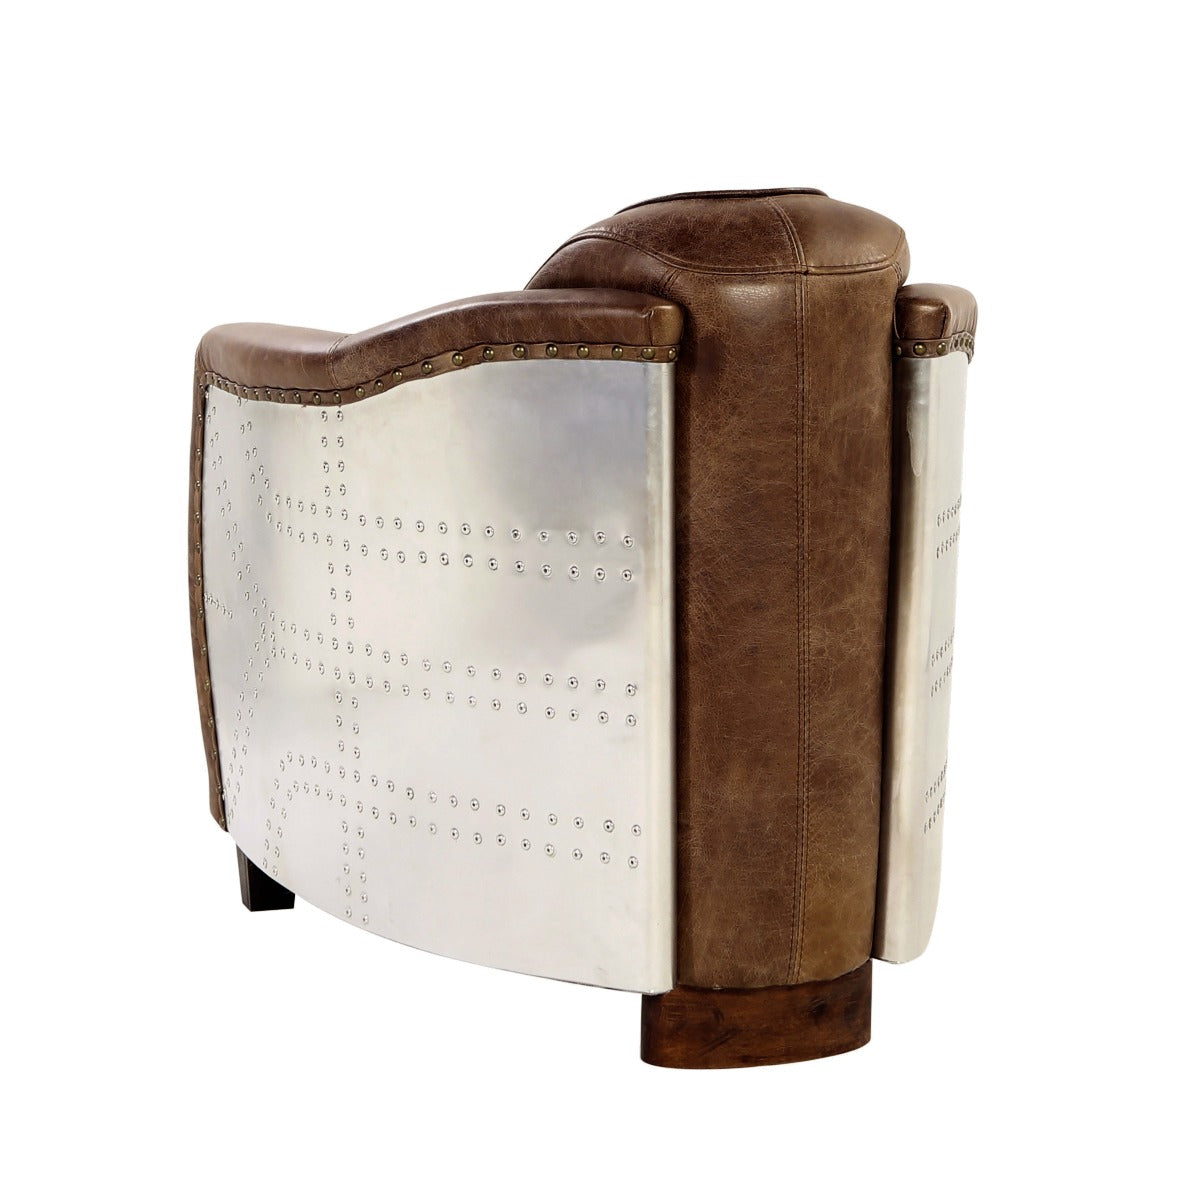 Acme - Brancaster Chair 53547 Retro Brown Top Grain Leather & Aluminum